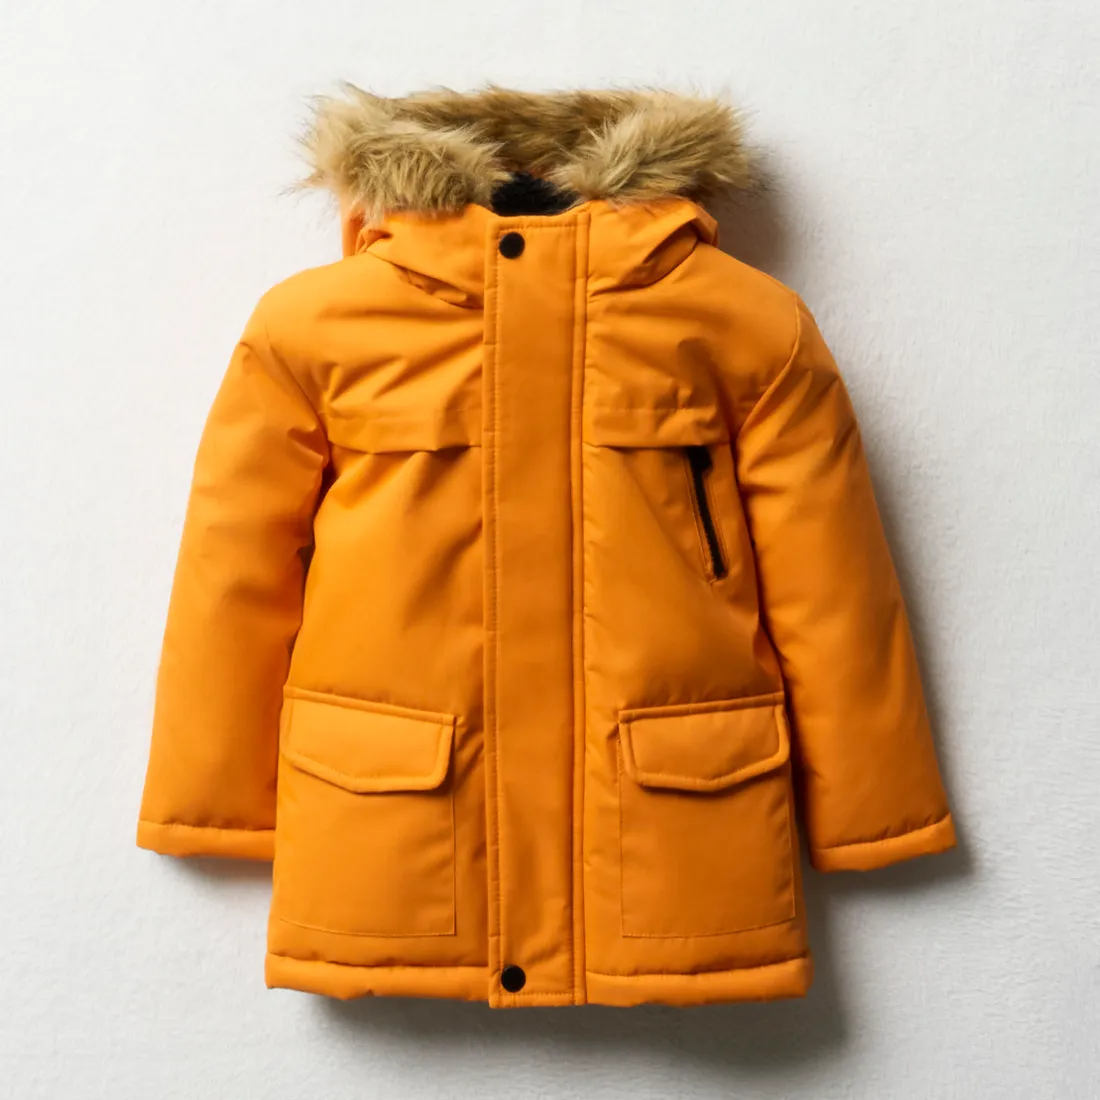 Hooded parka jacket ochre - BOYS 2-8 YEARS Jackets & Knitwear | Ackermans